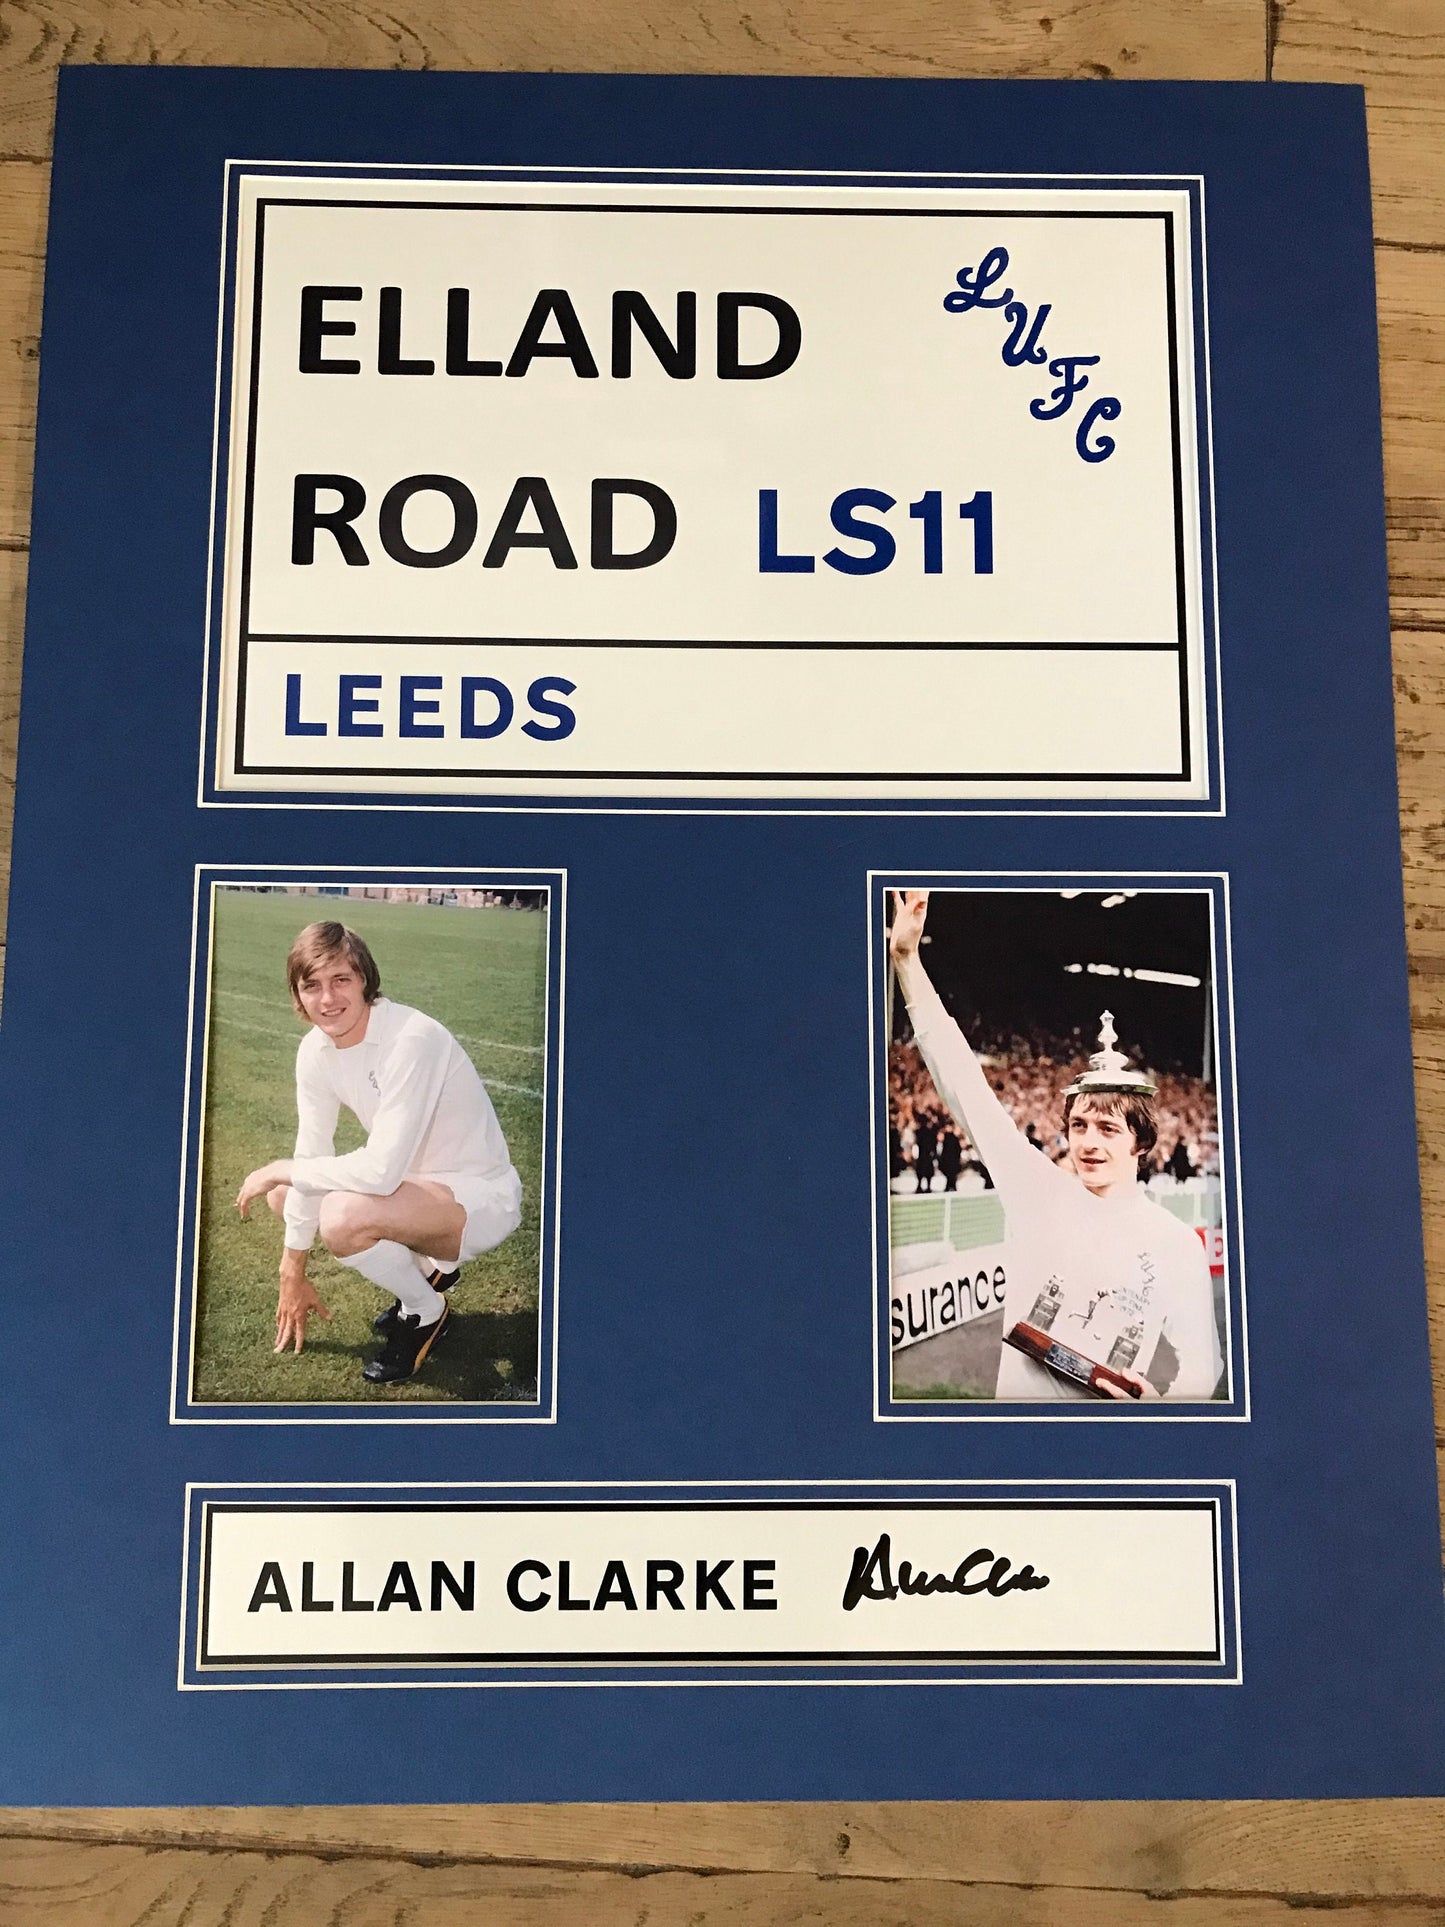 Allan Clarke - Leeds United AFC - 20x16in signed photo mount - Leeds memorabilia, gift, display (UNFRAMED)